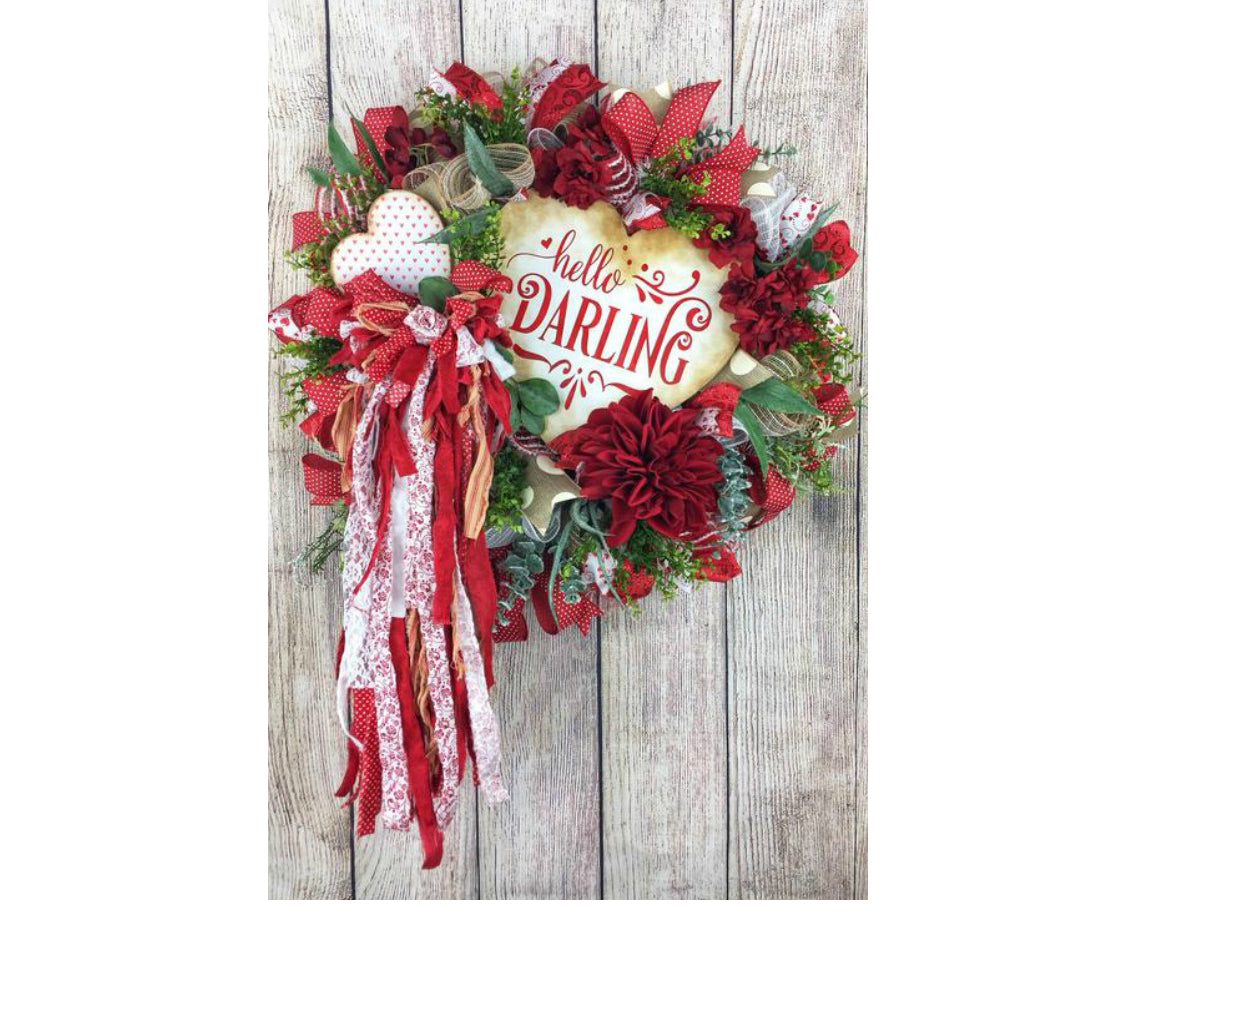 January 2019 Trendy Tree Customer Wreathes & Centerpieces